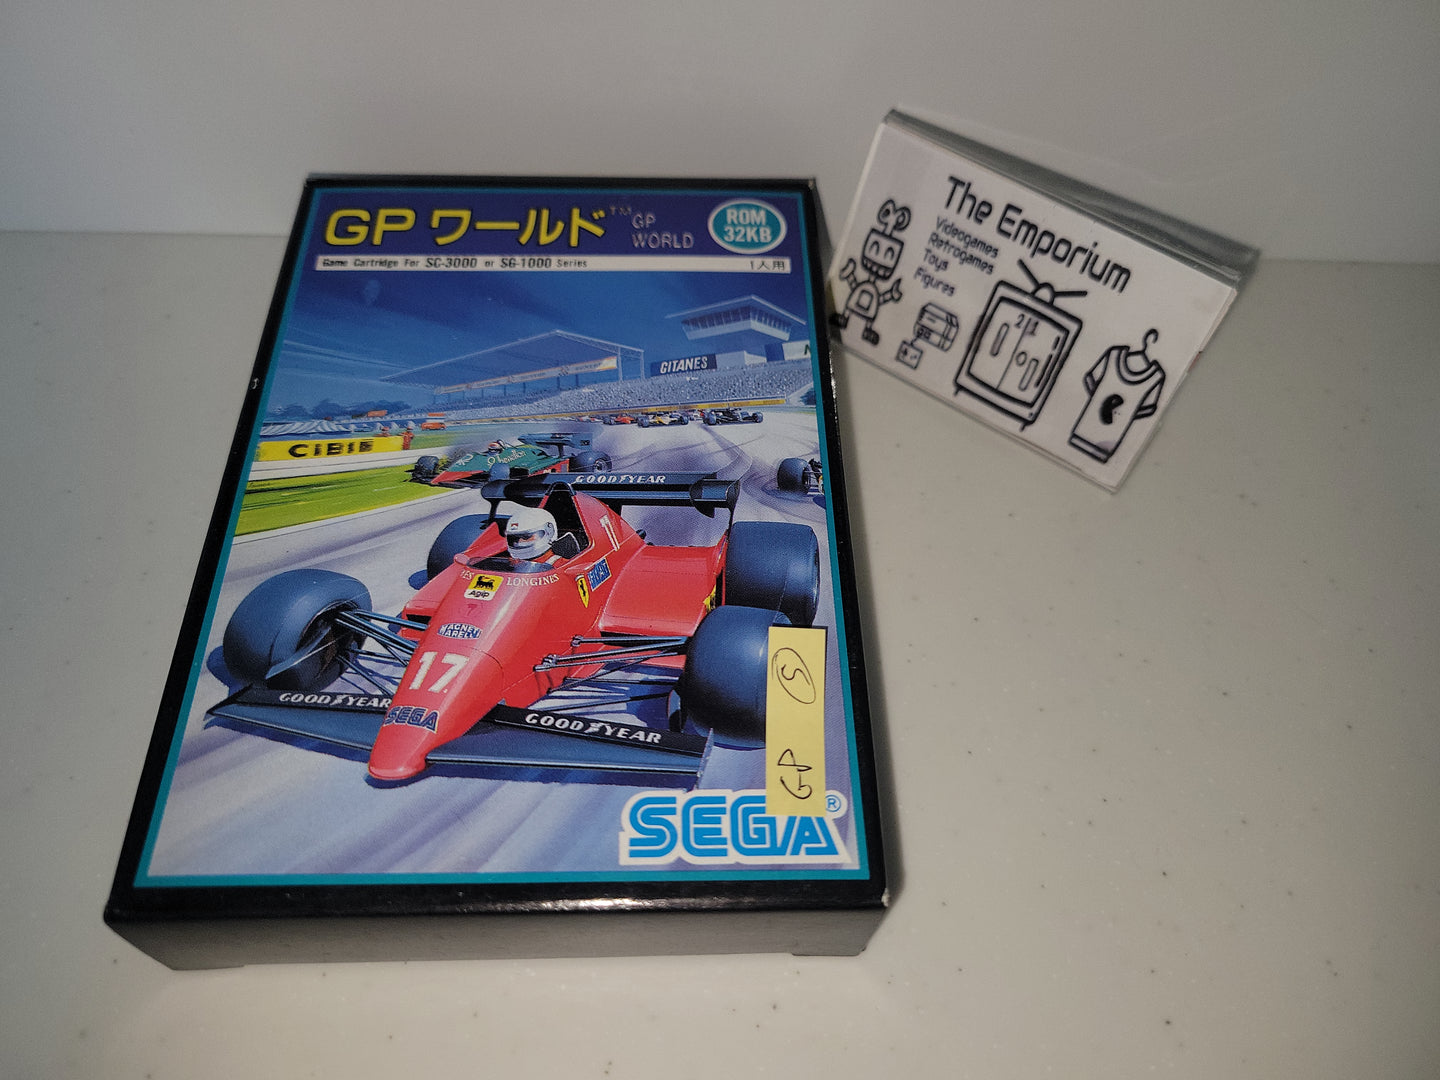 GP World - Sega mark sg1000